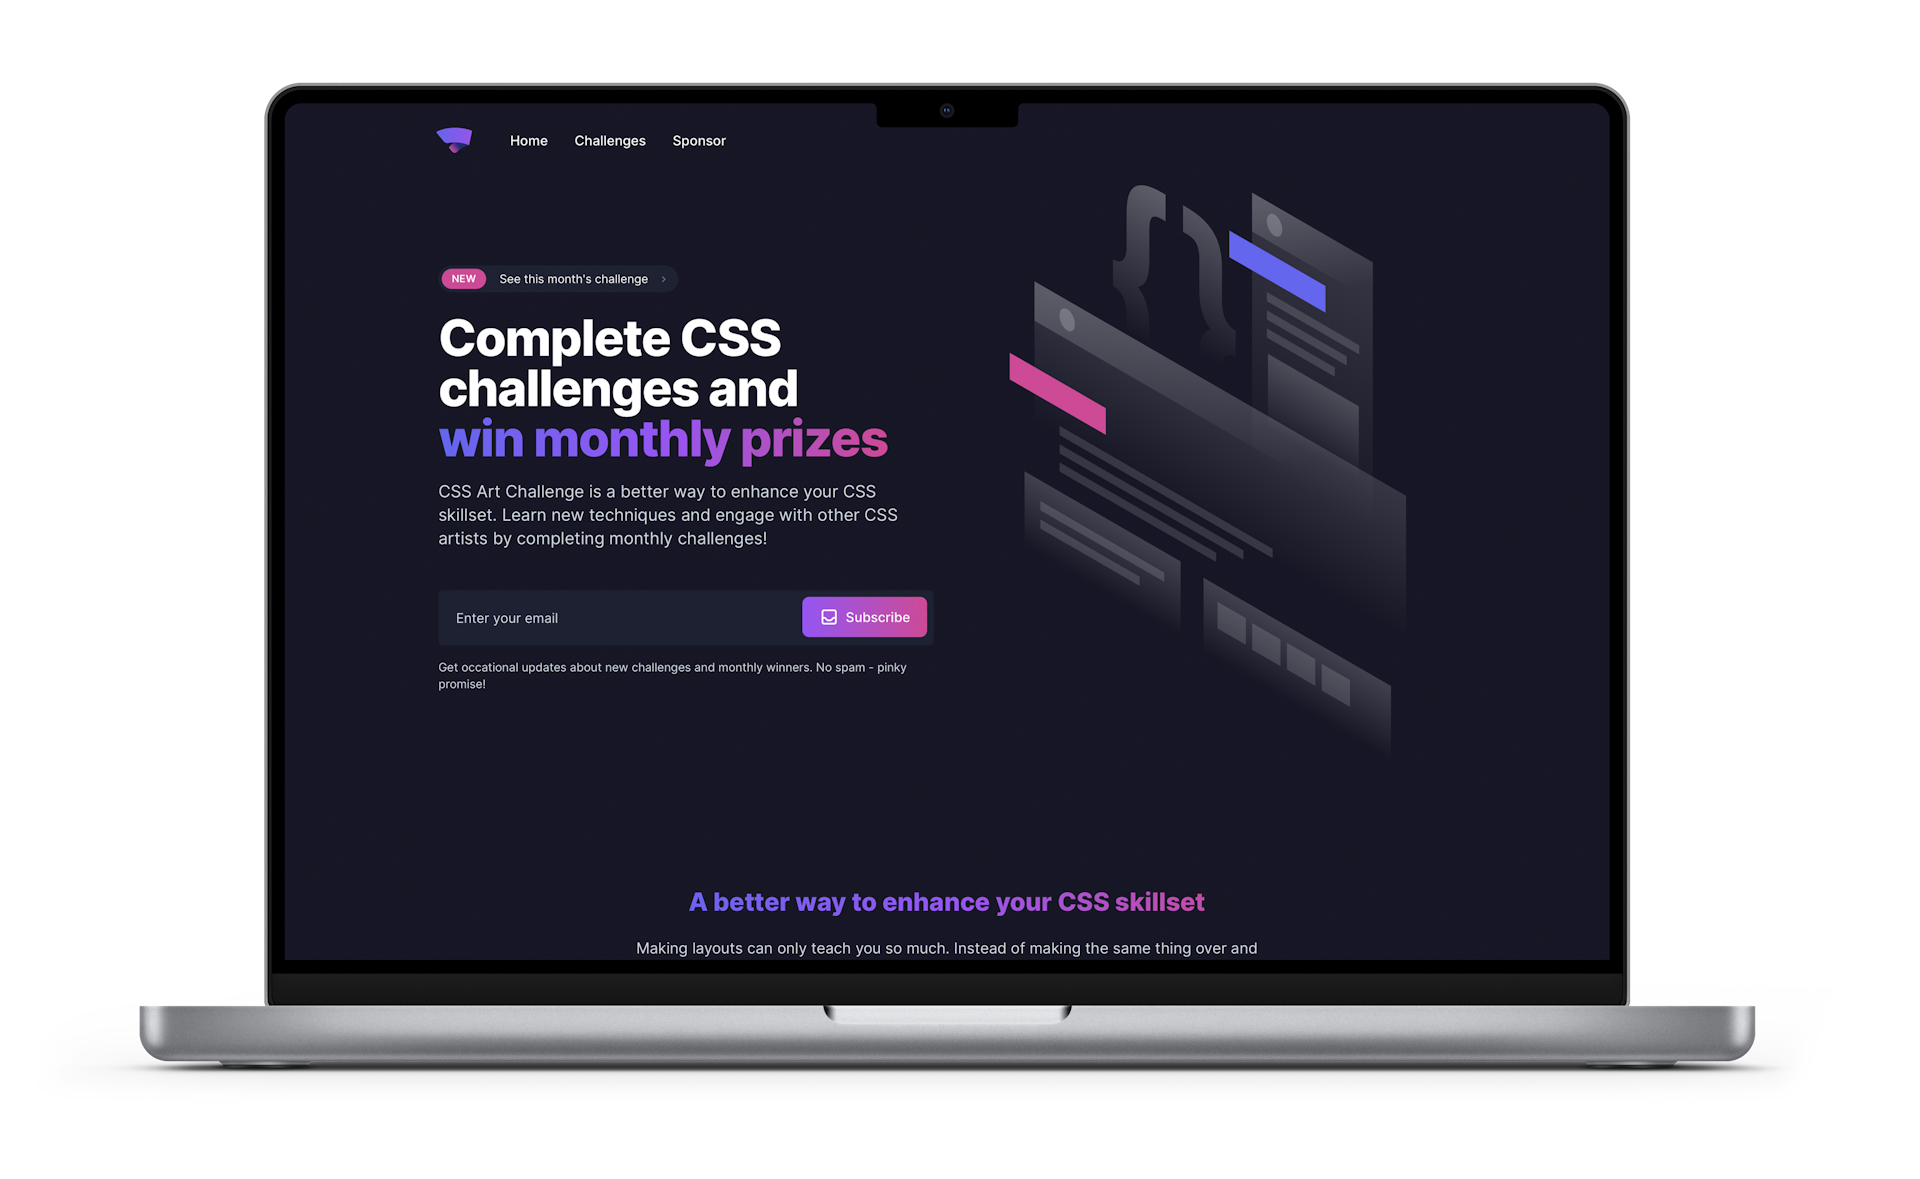 CSS Art Challenge on a Macbook Pro